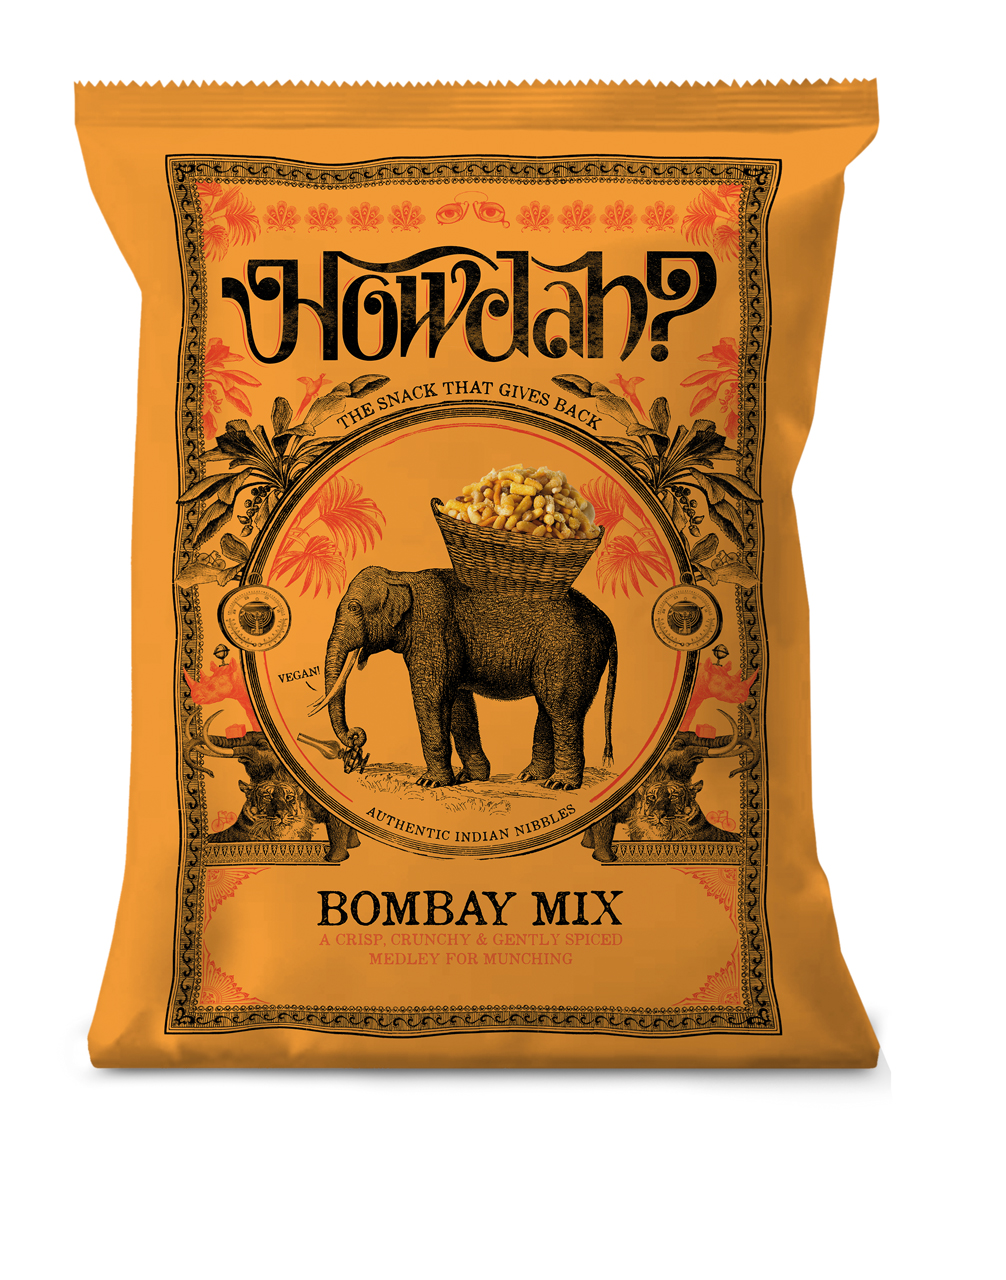 Howdah - Bombay Mix Chips - 150g.